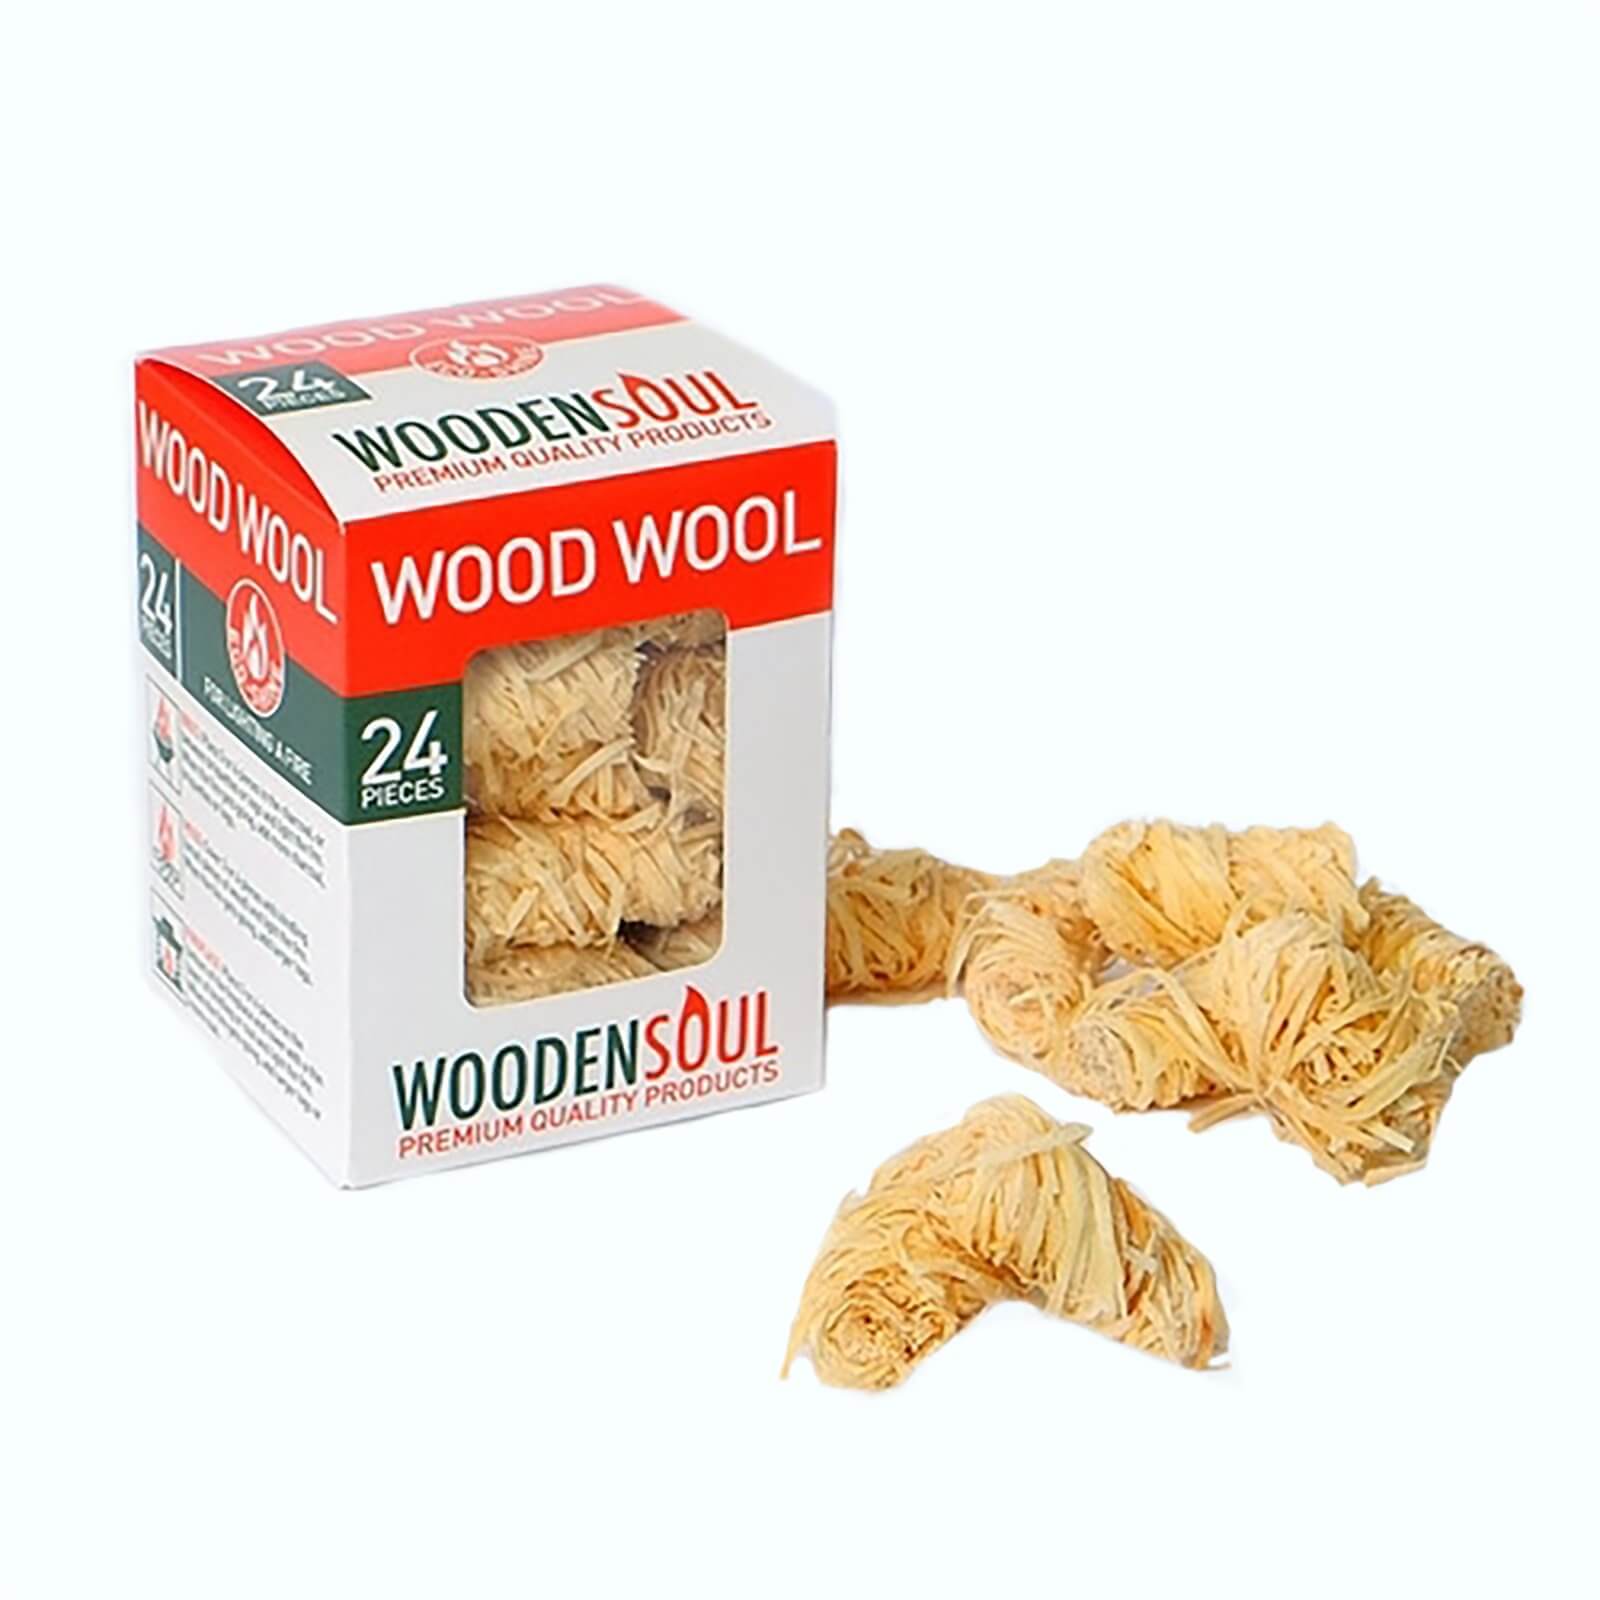 Woodensoul Wood Wool Firelighter Fuel